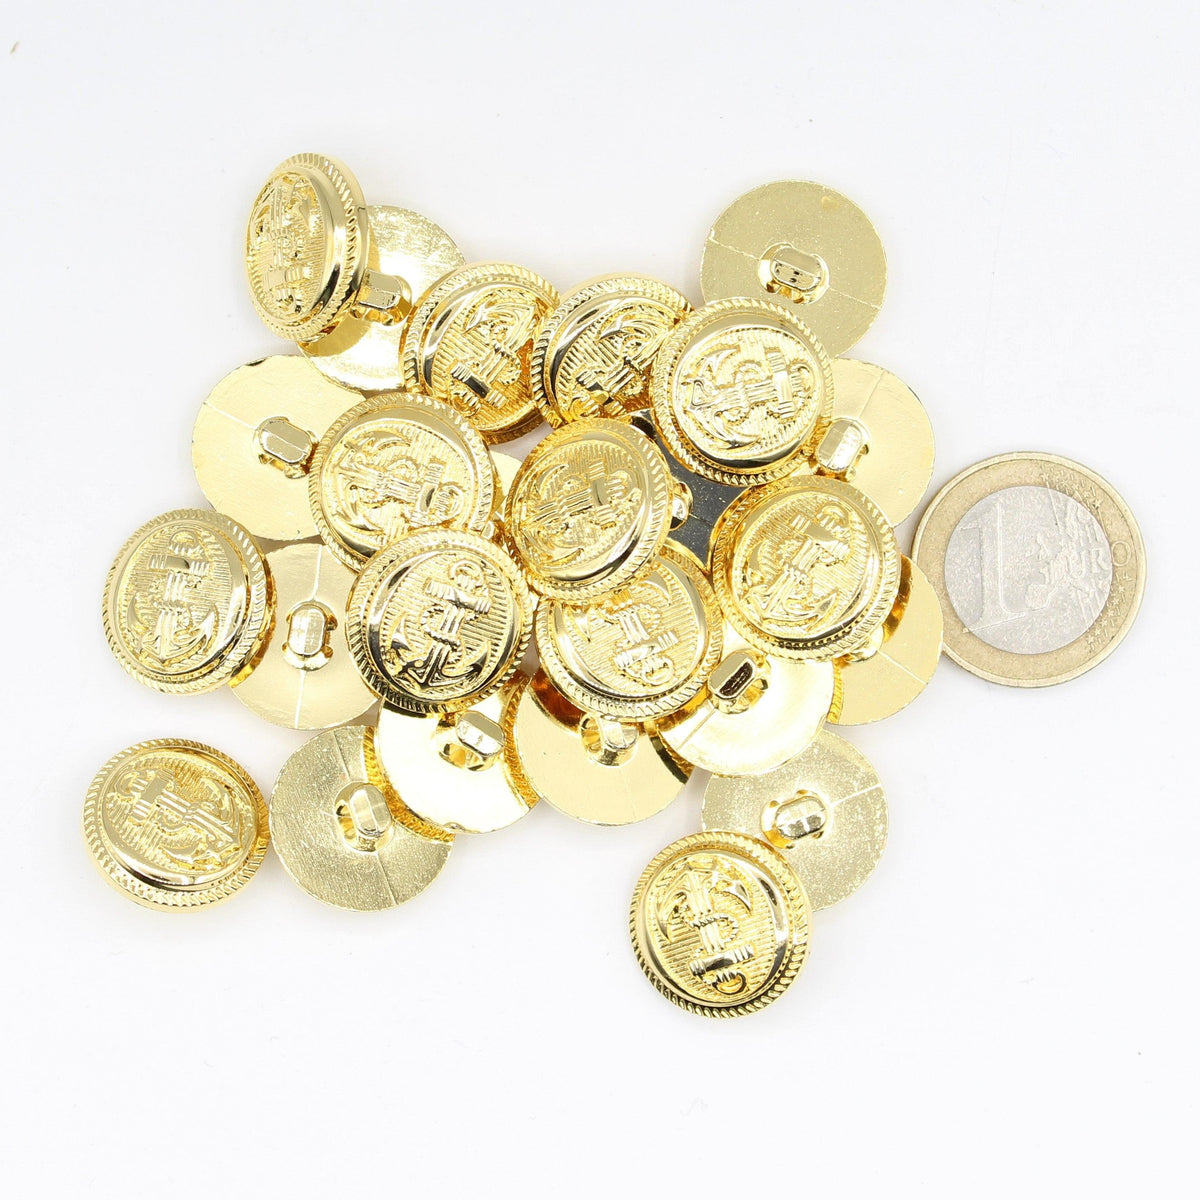 Gold Metal Crest Anchor Navy style Vintage Blazer Buttons #KMQ041  boutonboutonsbuttonbuttonsgoldgoudhotKMQKMQ041knoop op  voetknopknopenknoppknoppenmetalnavyor – ACCESSOIRES LEDUC